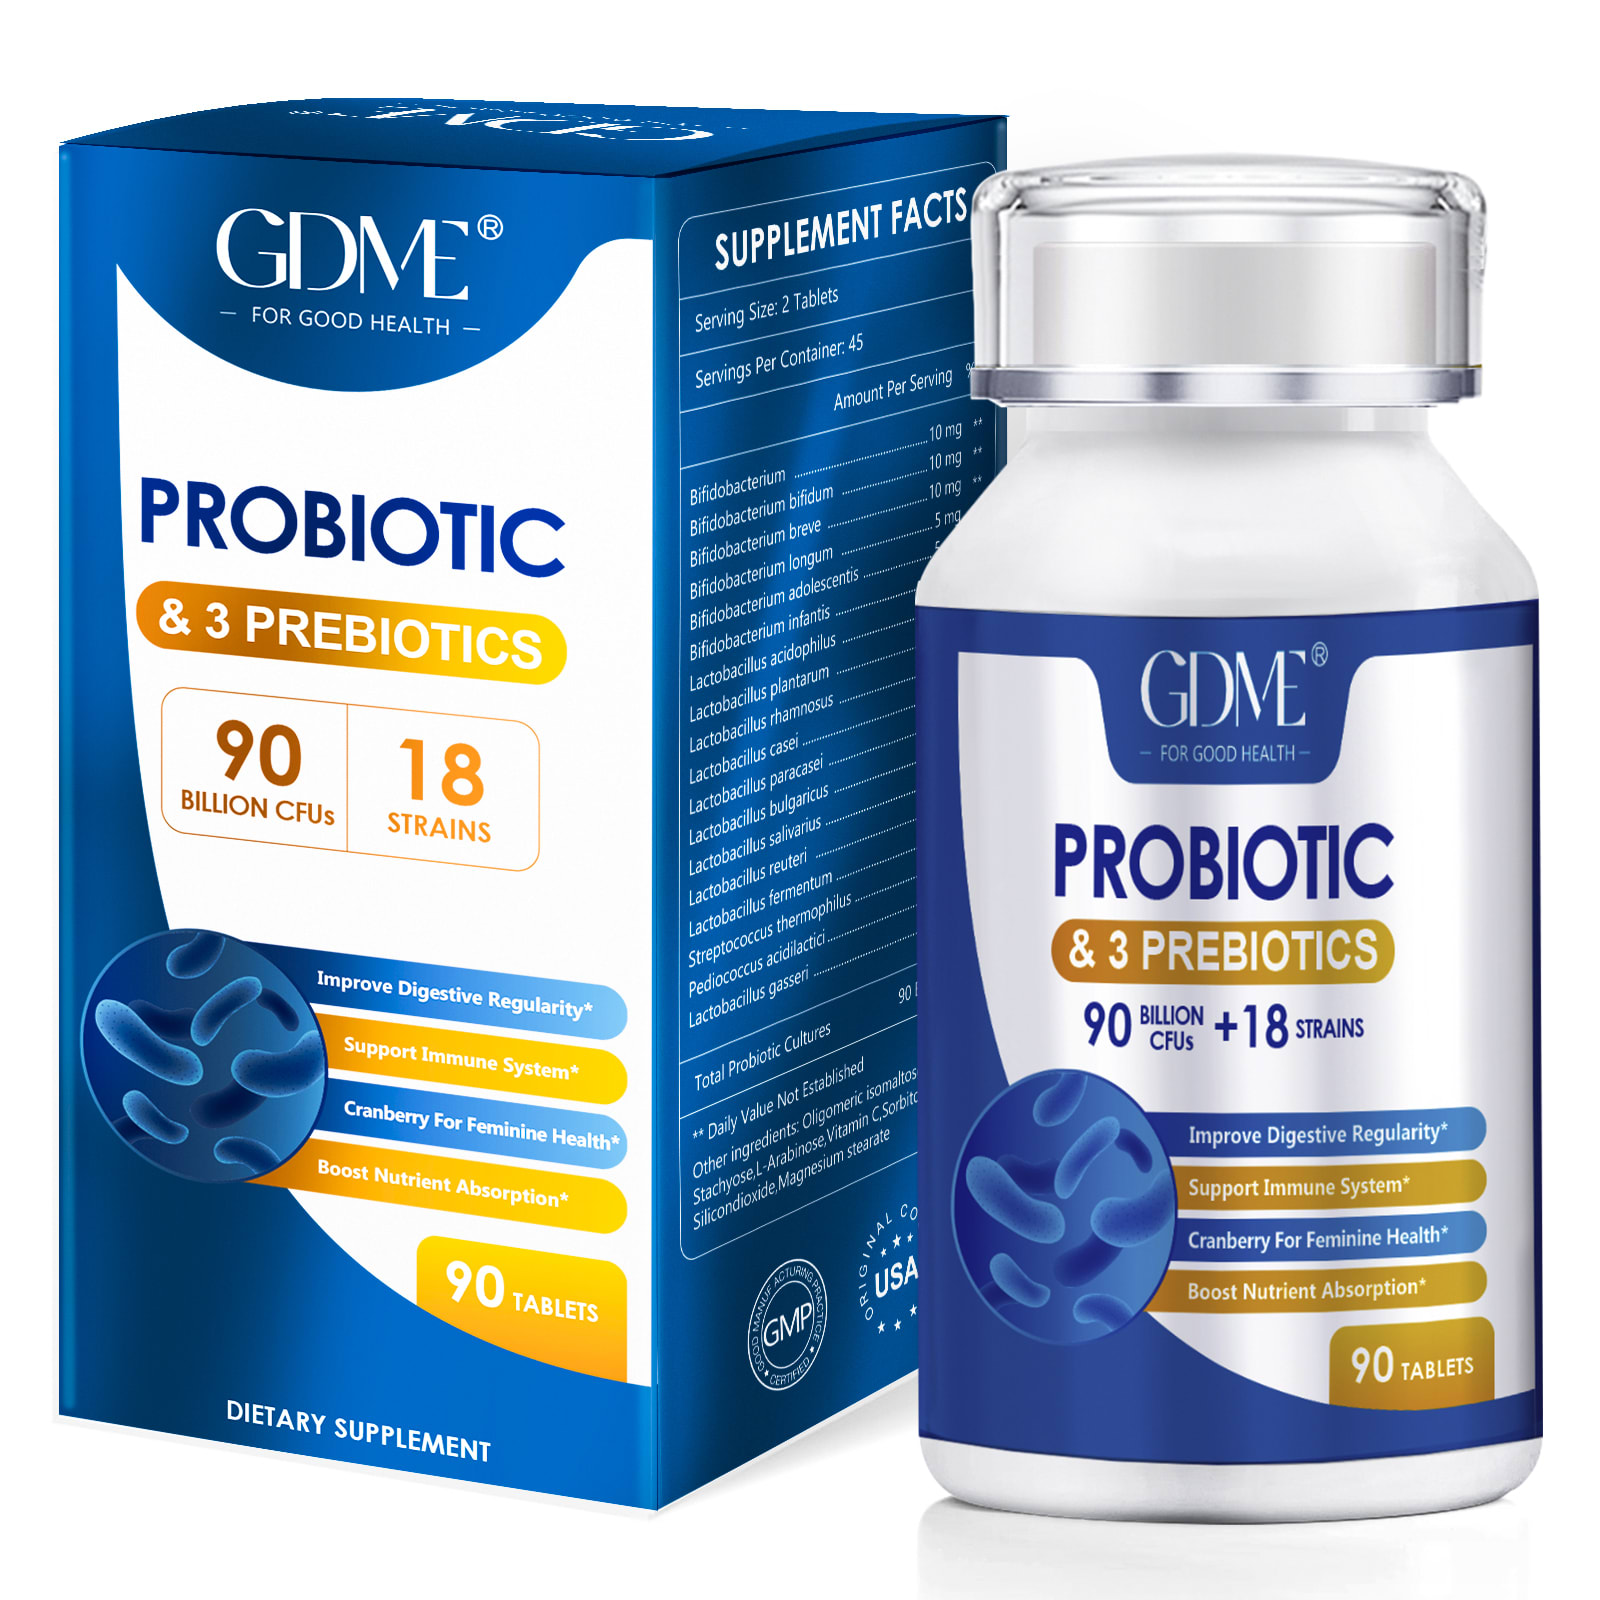 GDME Probiotic Food Supplement